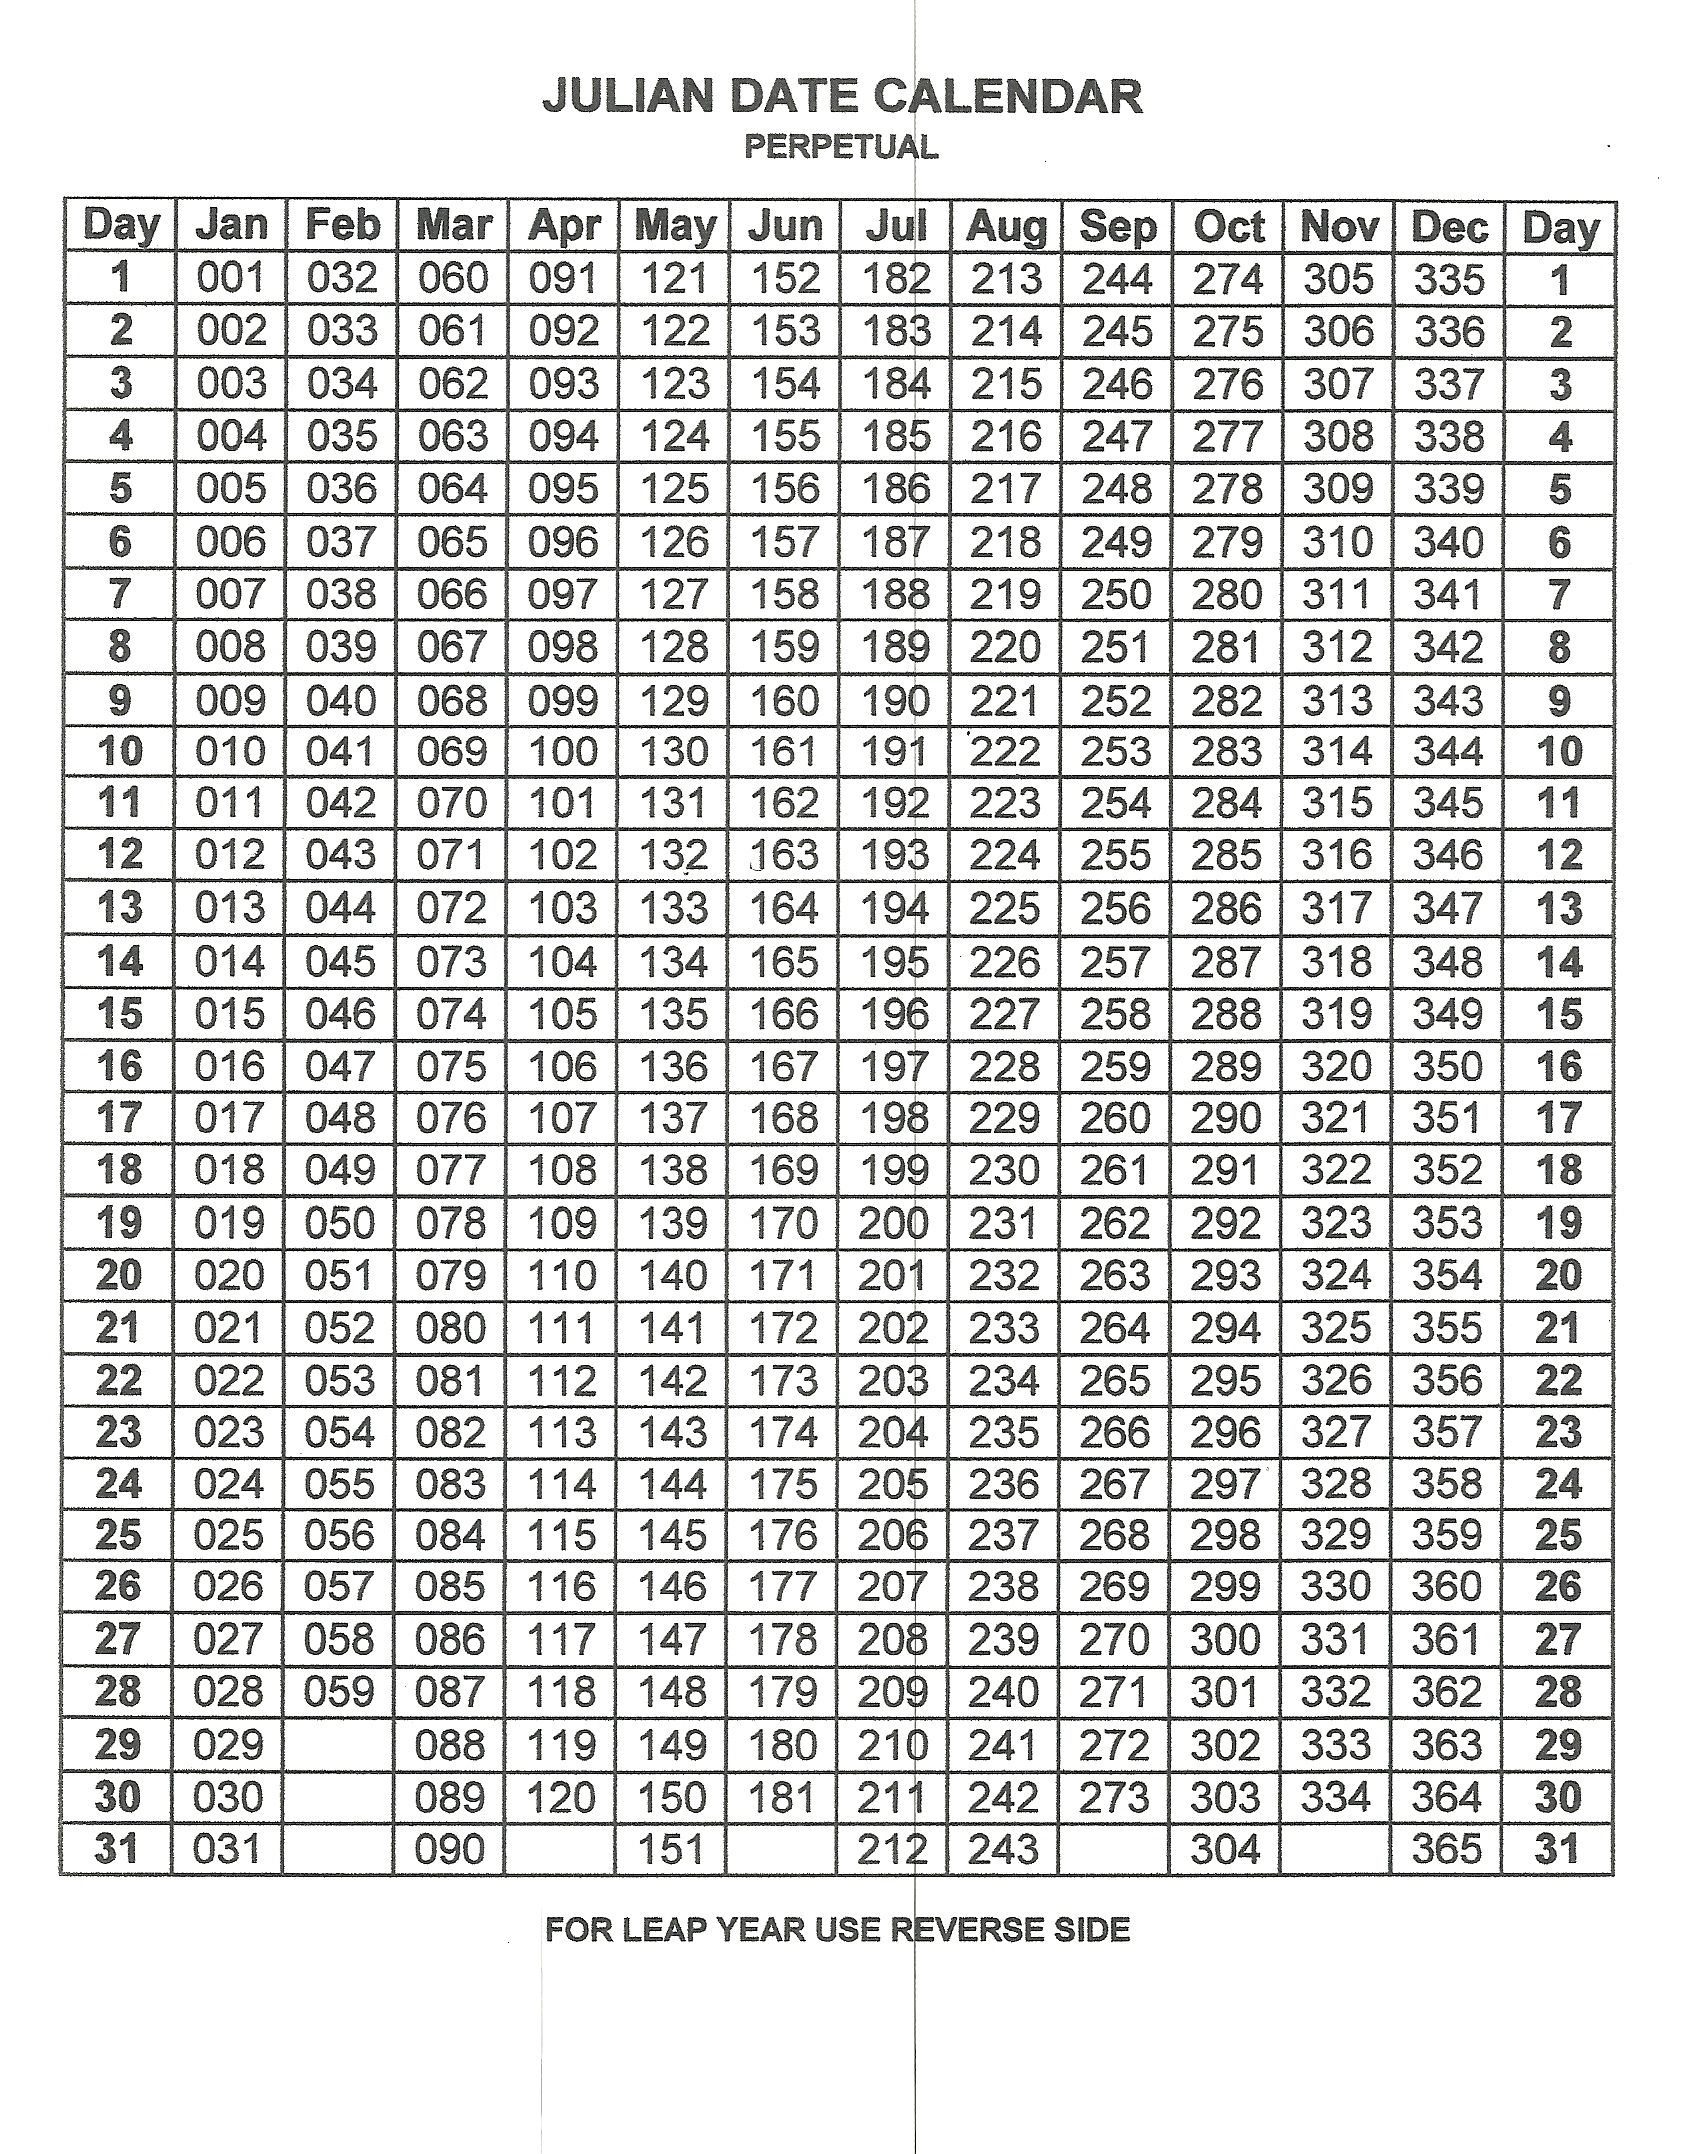 Perpetual Julian Date Calendar | Calendar Printables intended for Perpetual Julian Calendar 2019 Printable Free